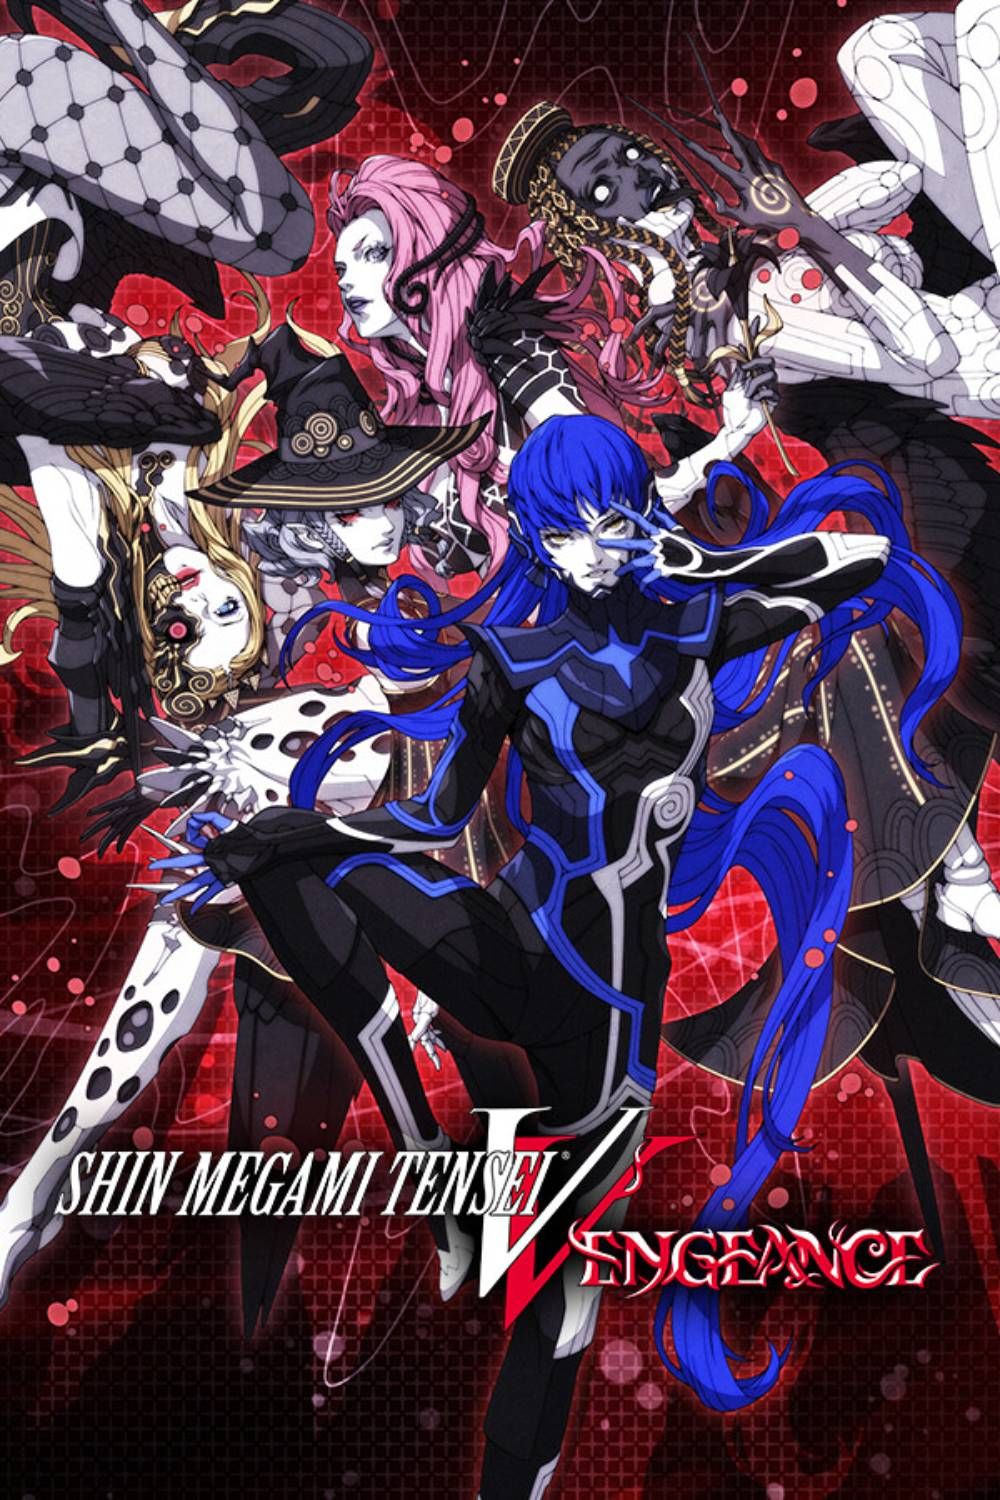 Arte da capa da página de etiqueta de Shin Megami Tensei V: Vengeance